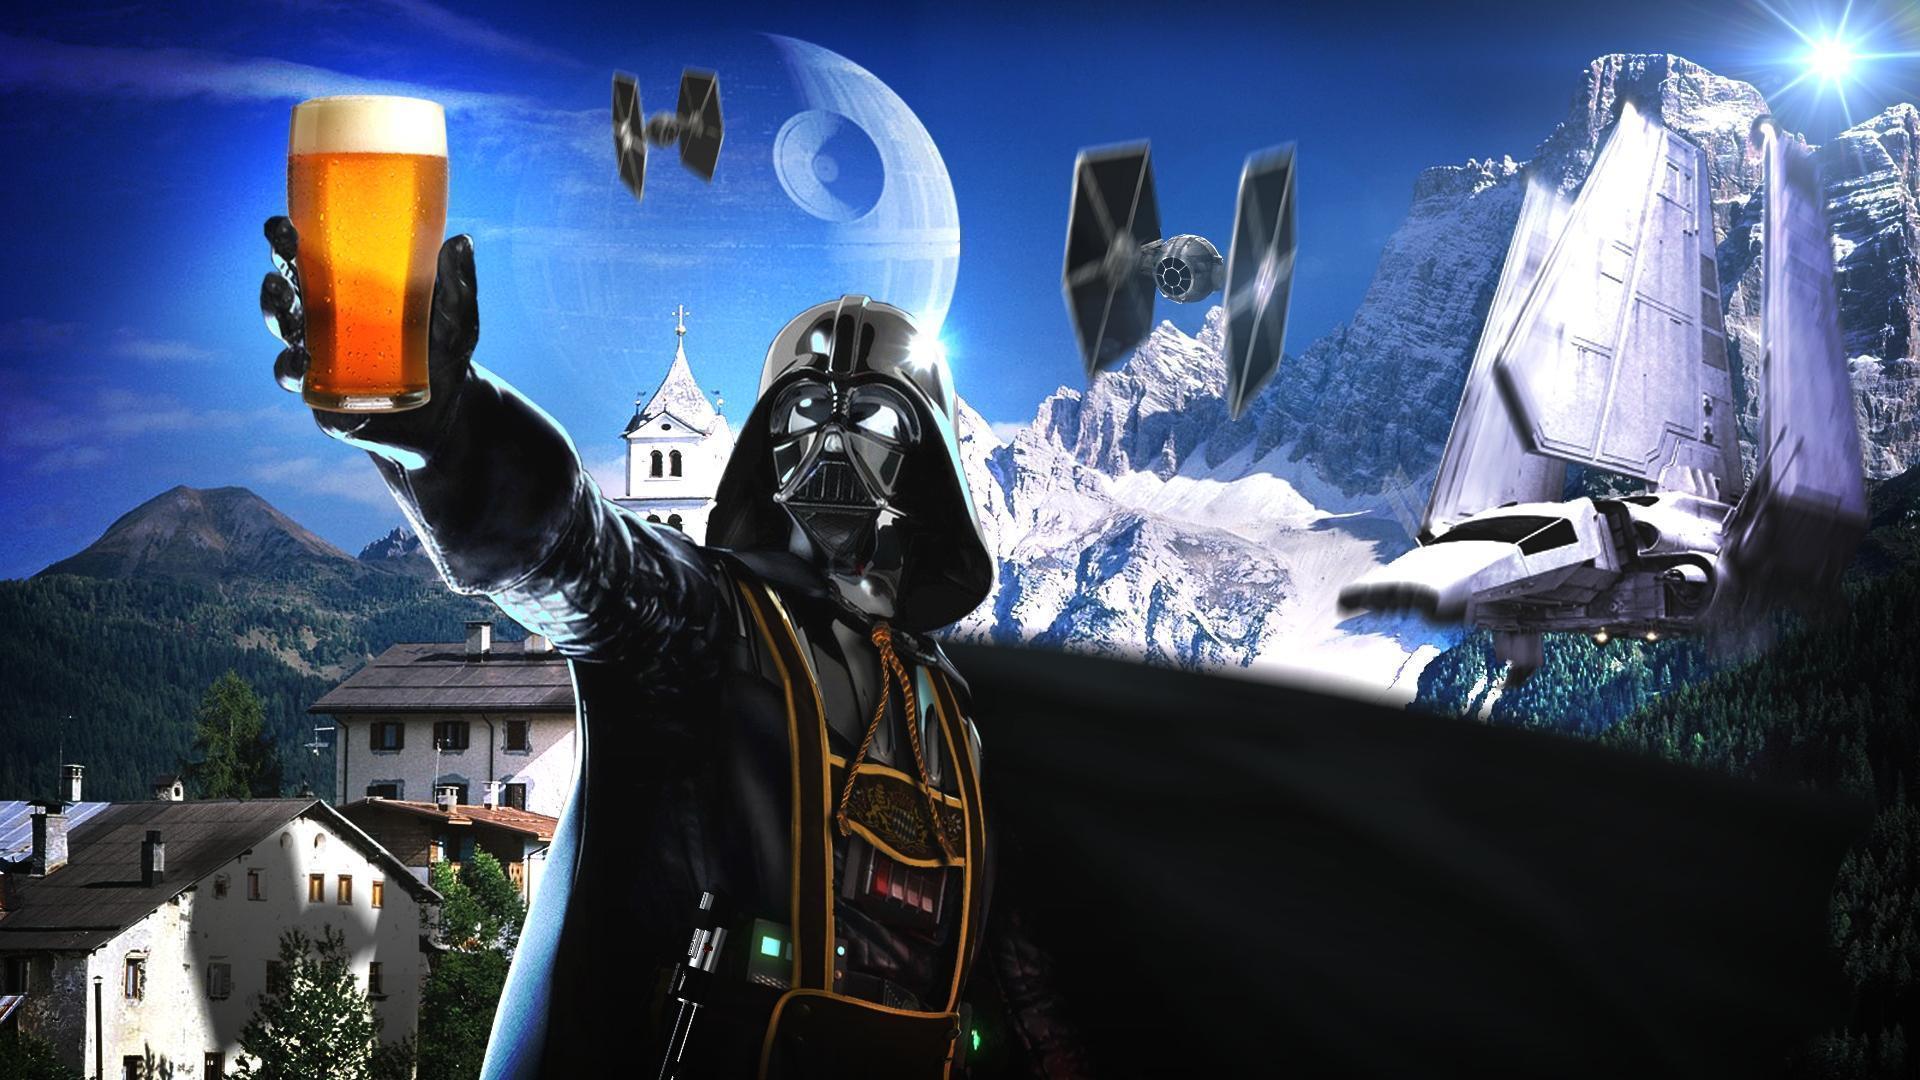 HD Beers Star Wars Darth Vader Sith German Alps Sci Fi Science